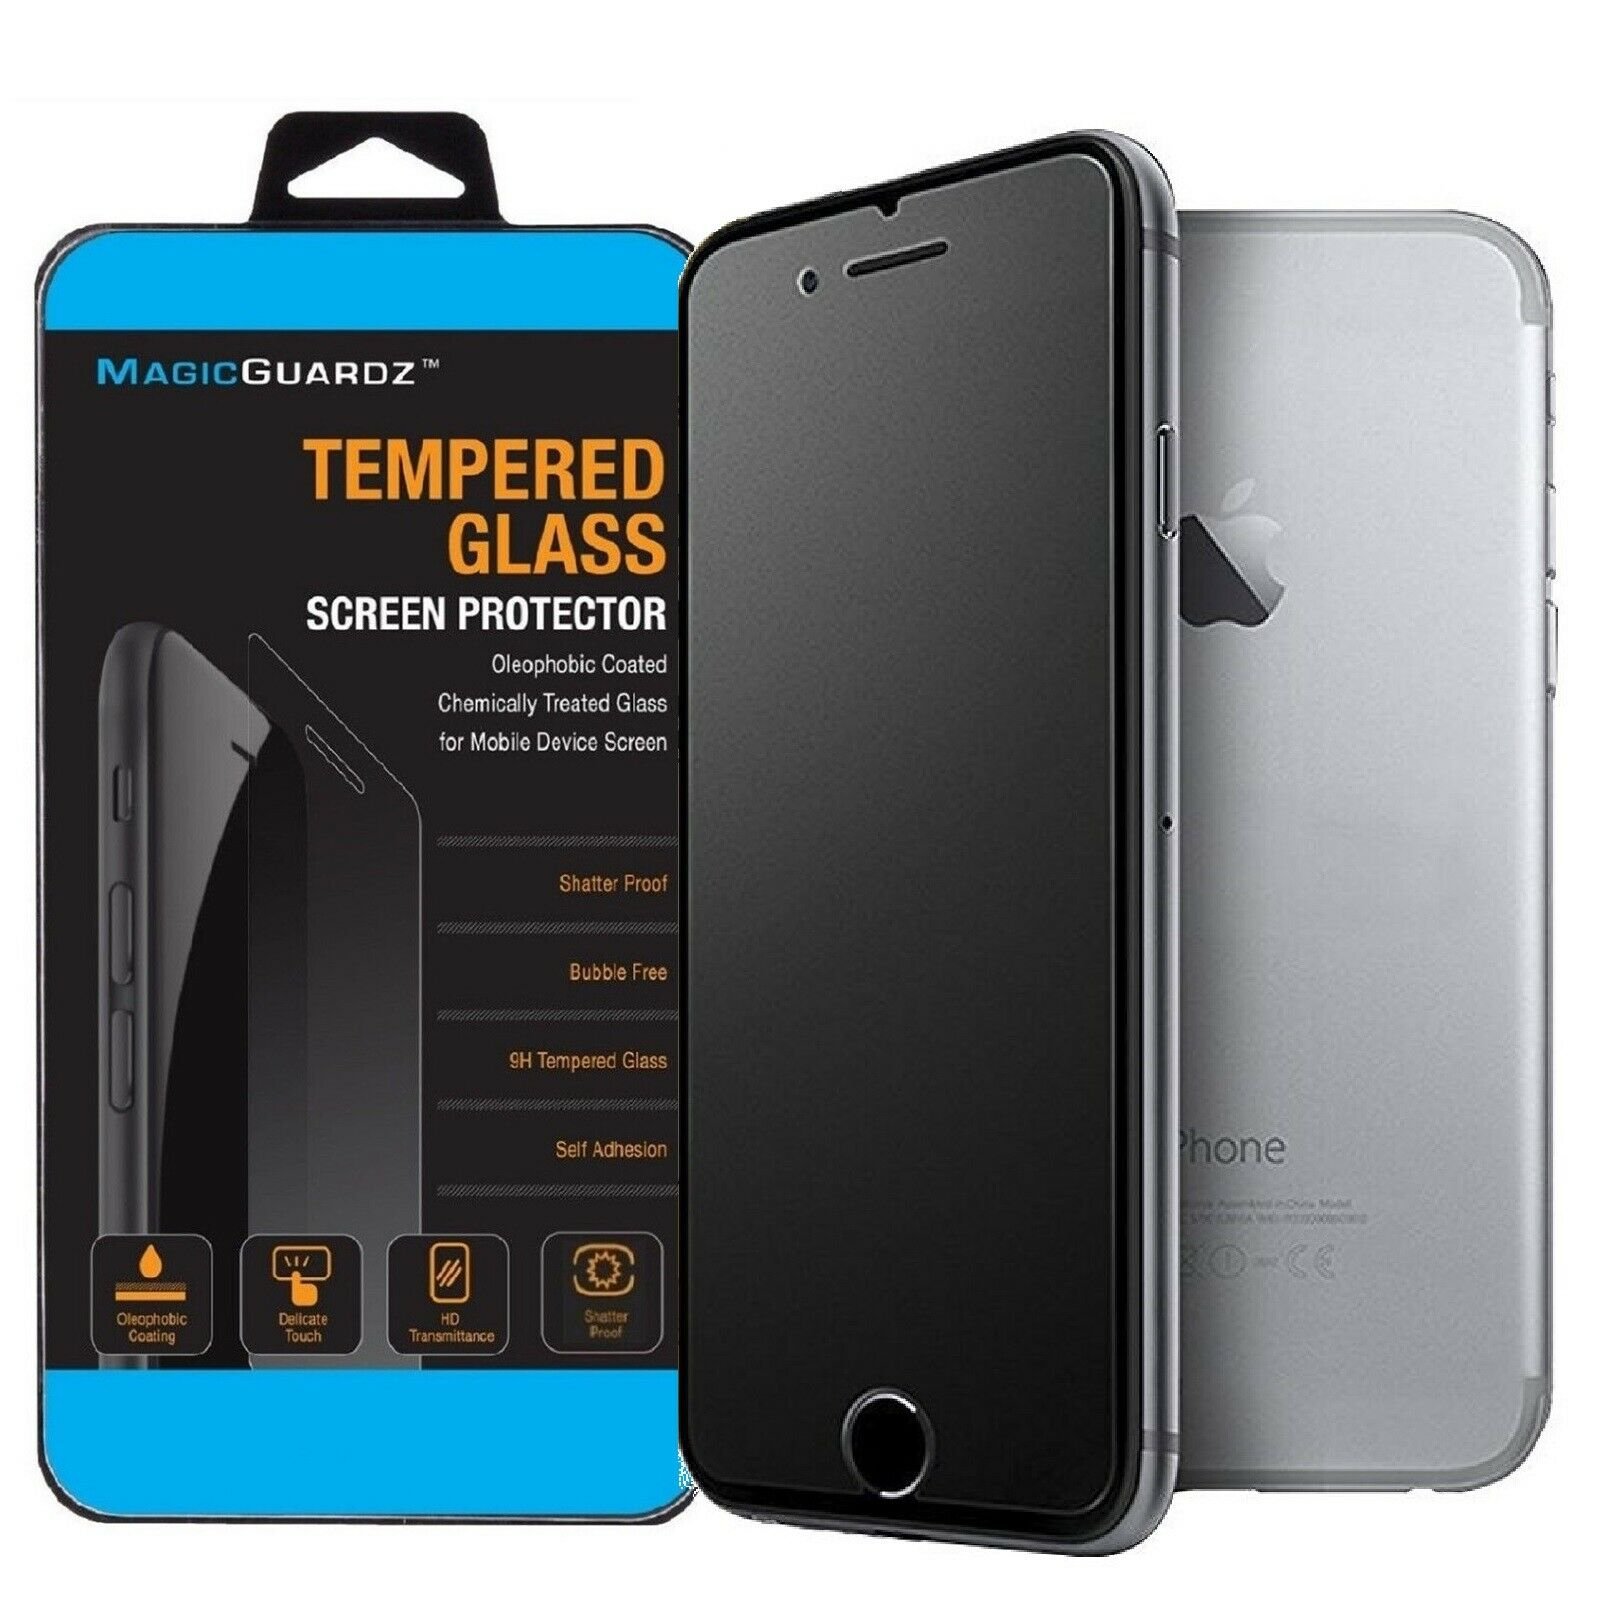 patrocinador puesto Otros lugares Matte Frost Tempered Glass Screen Protector For iPhone 6 7 8 Plus X XR XS  MAX SE | eBay